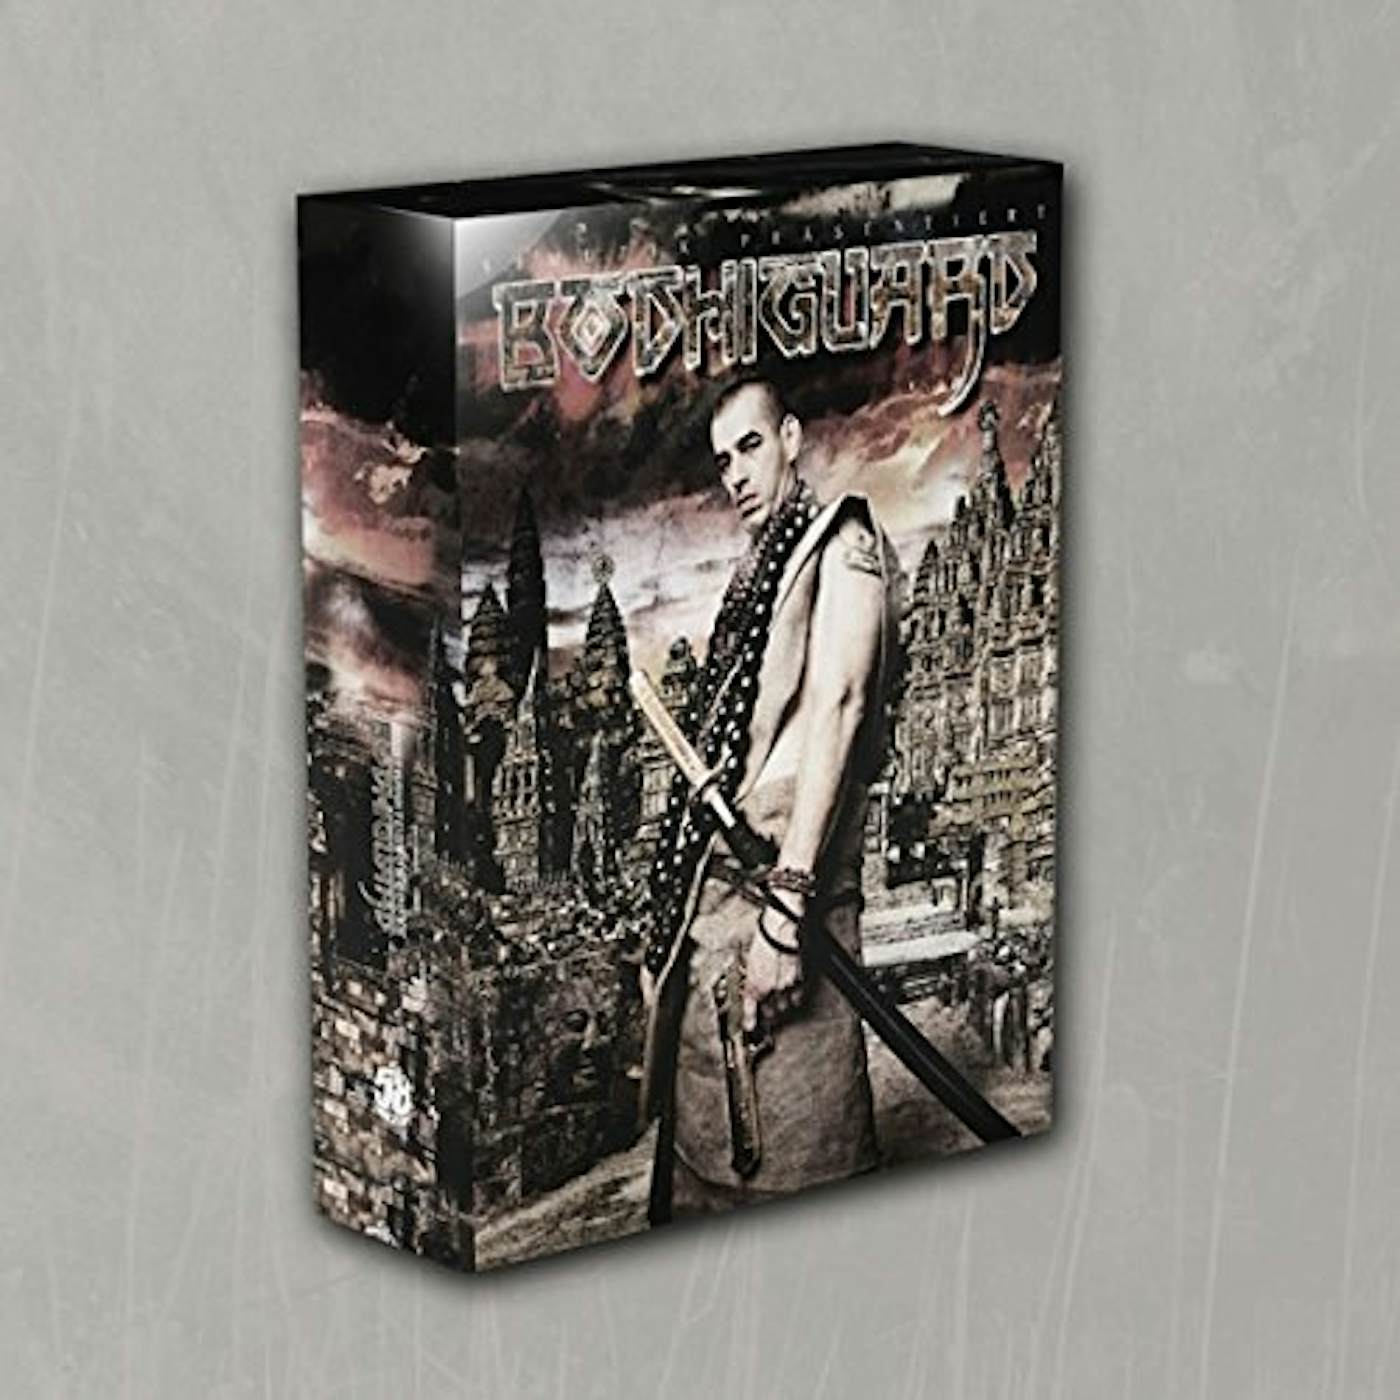 Absztrakkt & Snowgoons BODHIGUARD: FAN BOX EDITION CD